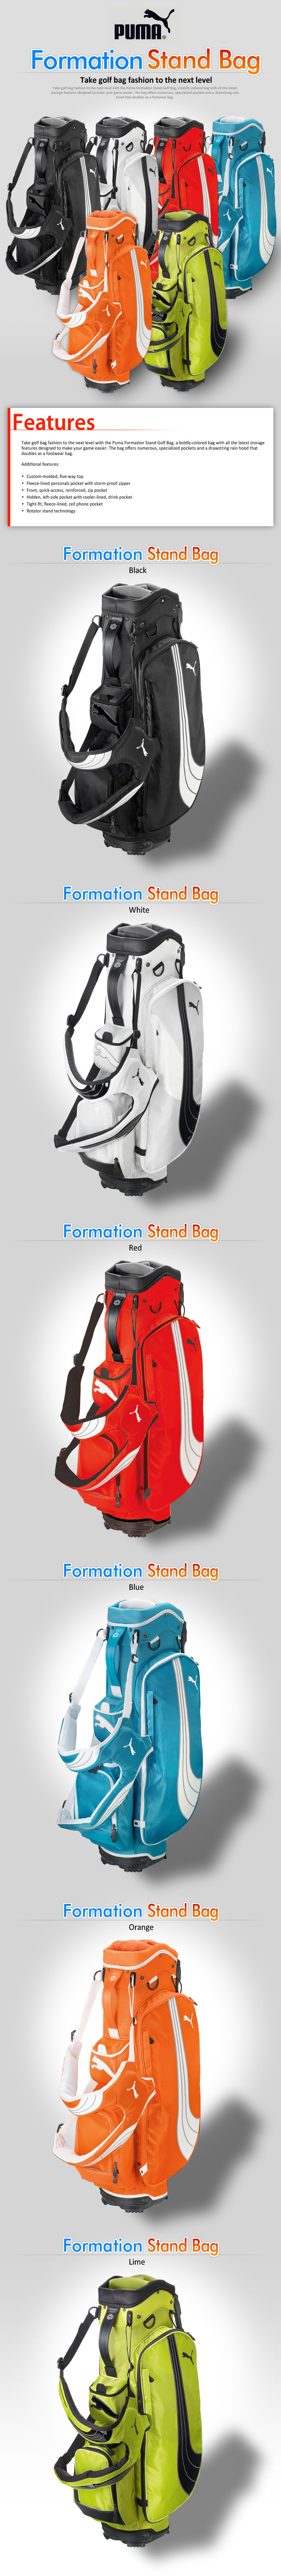 puma formation stand golf bag